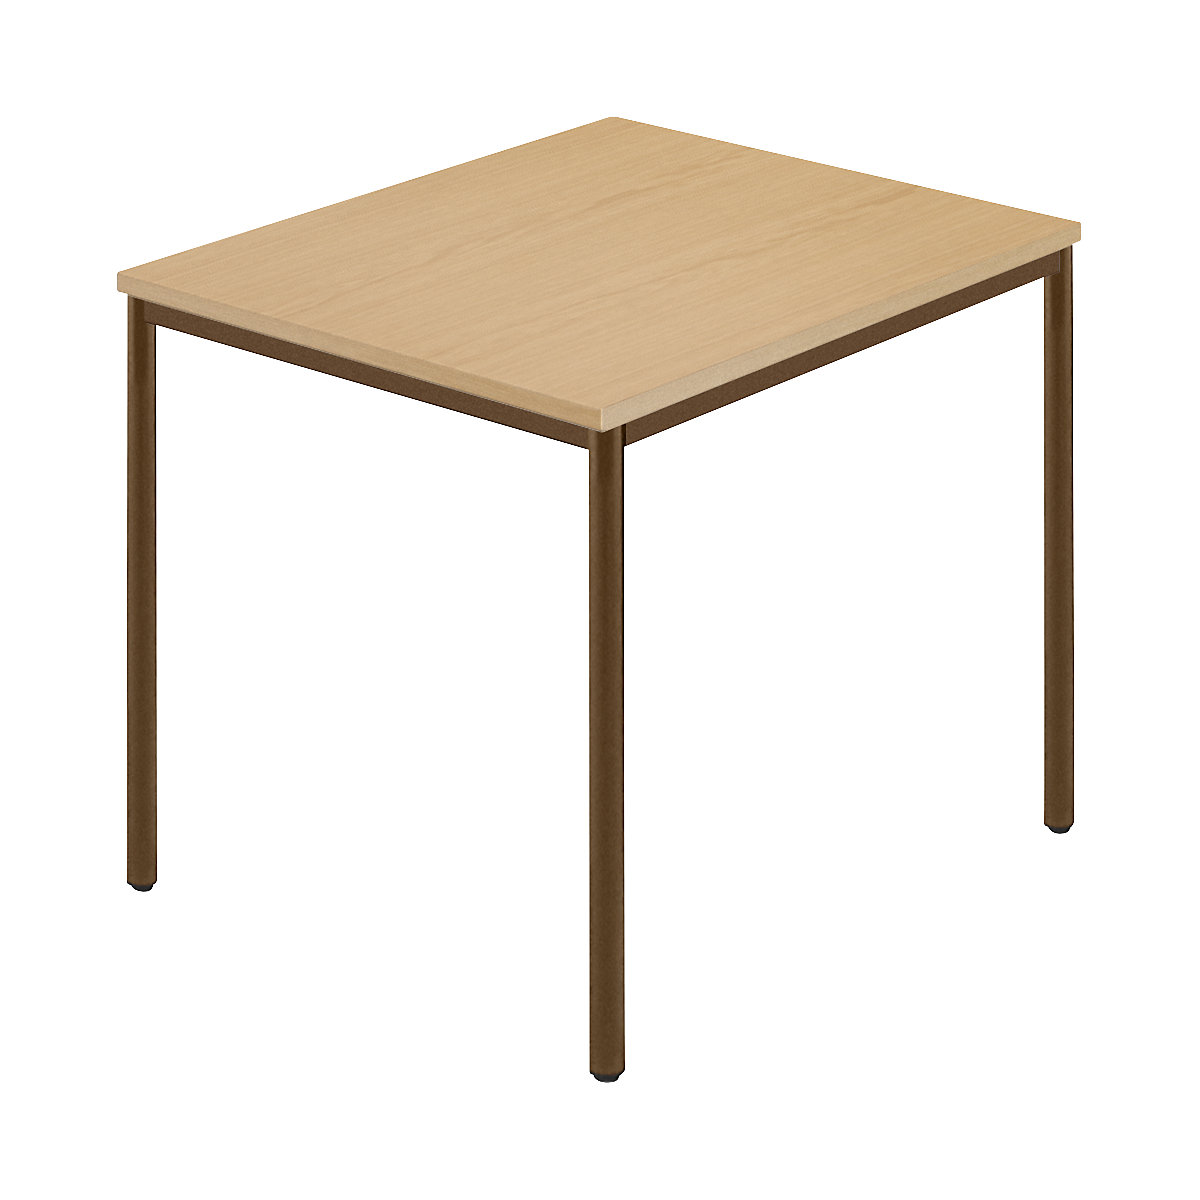 Obdĺžnikový stôl, kruhová rúrka s povrchovou úpravou, š x h 800 x 800 mm, prírodný buk / hnedá-6